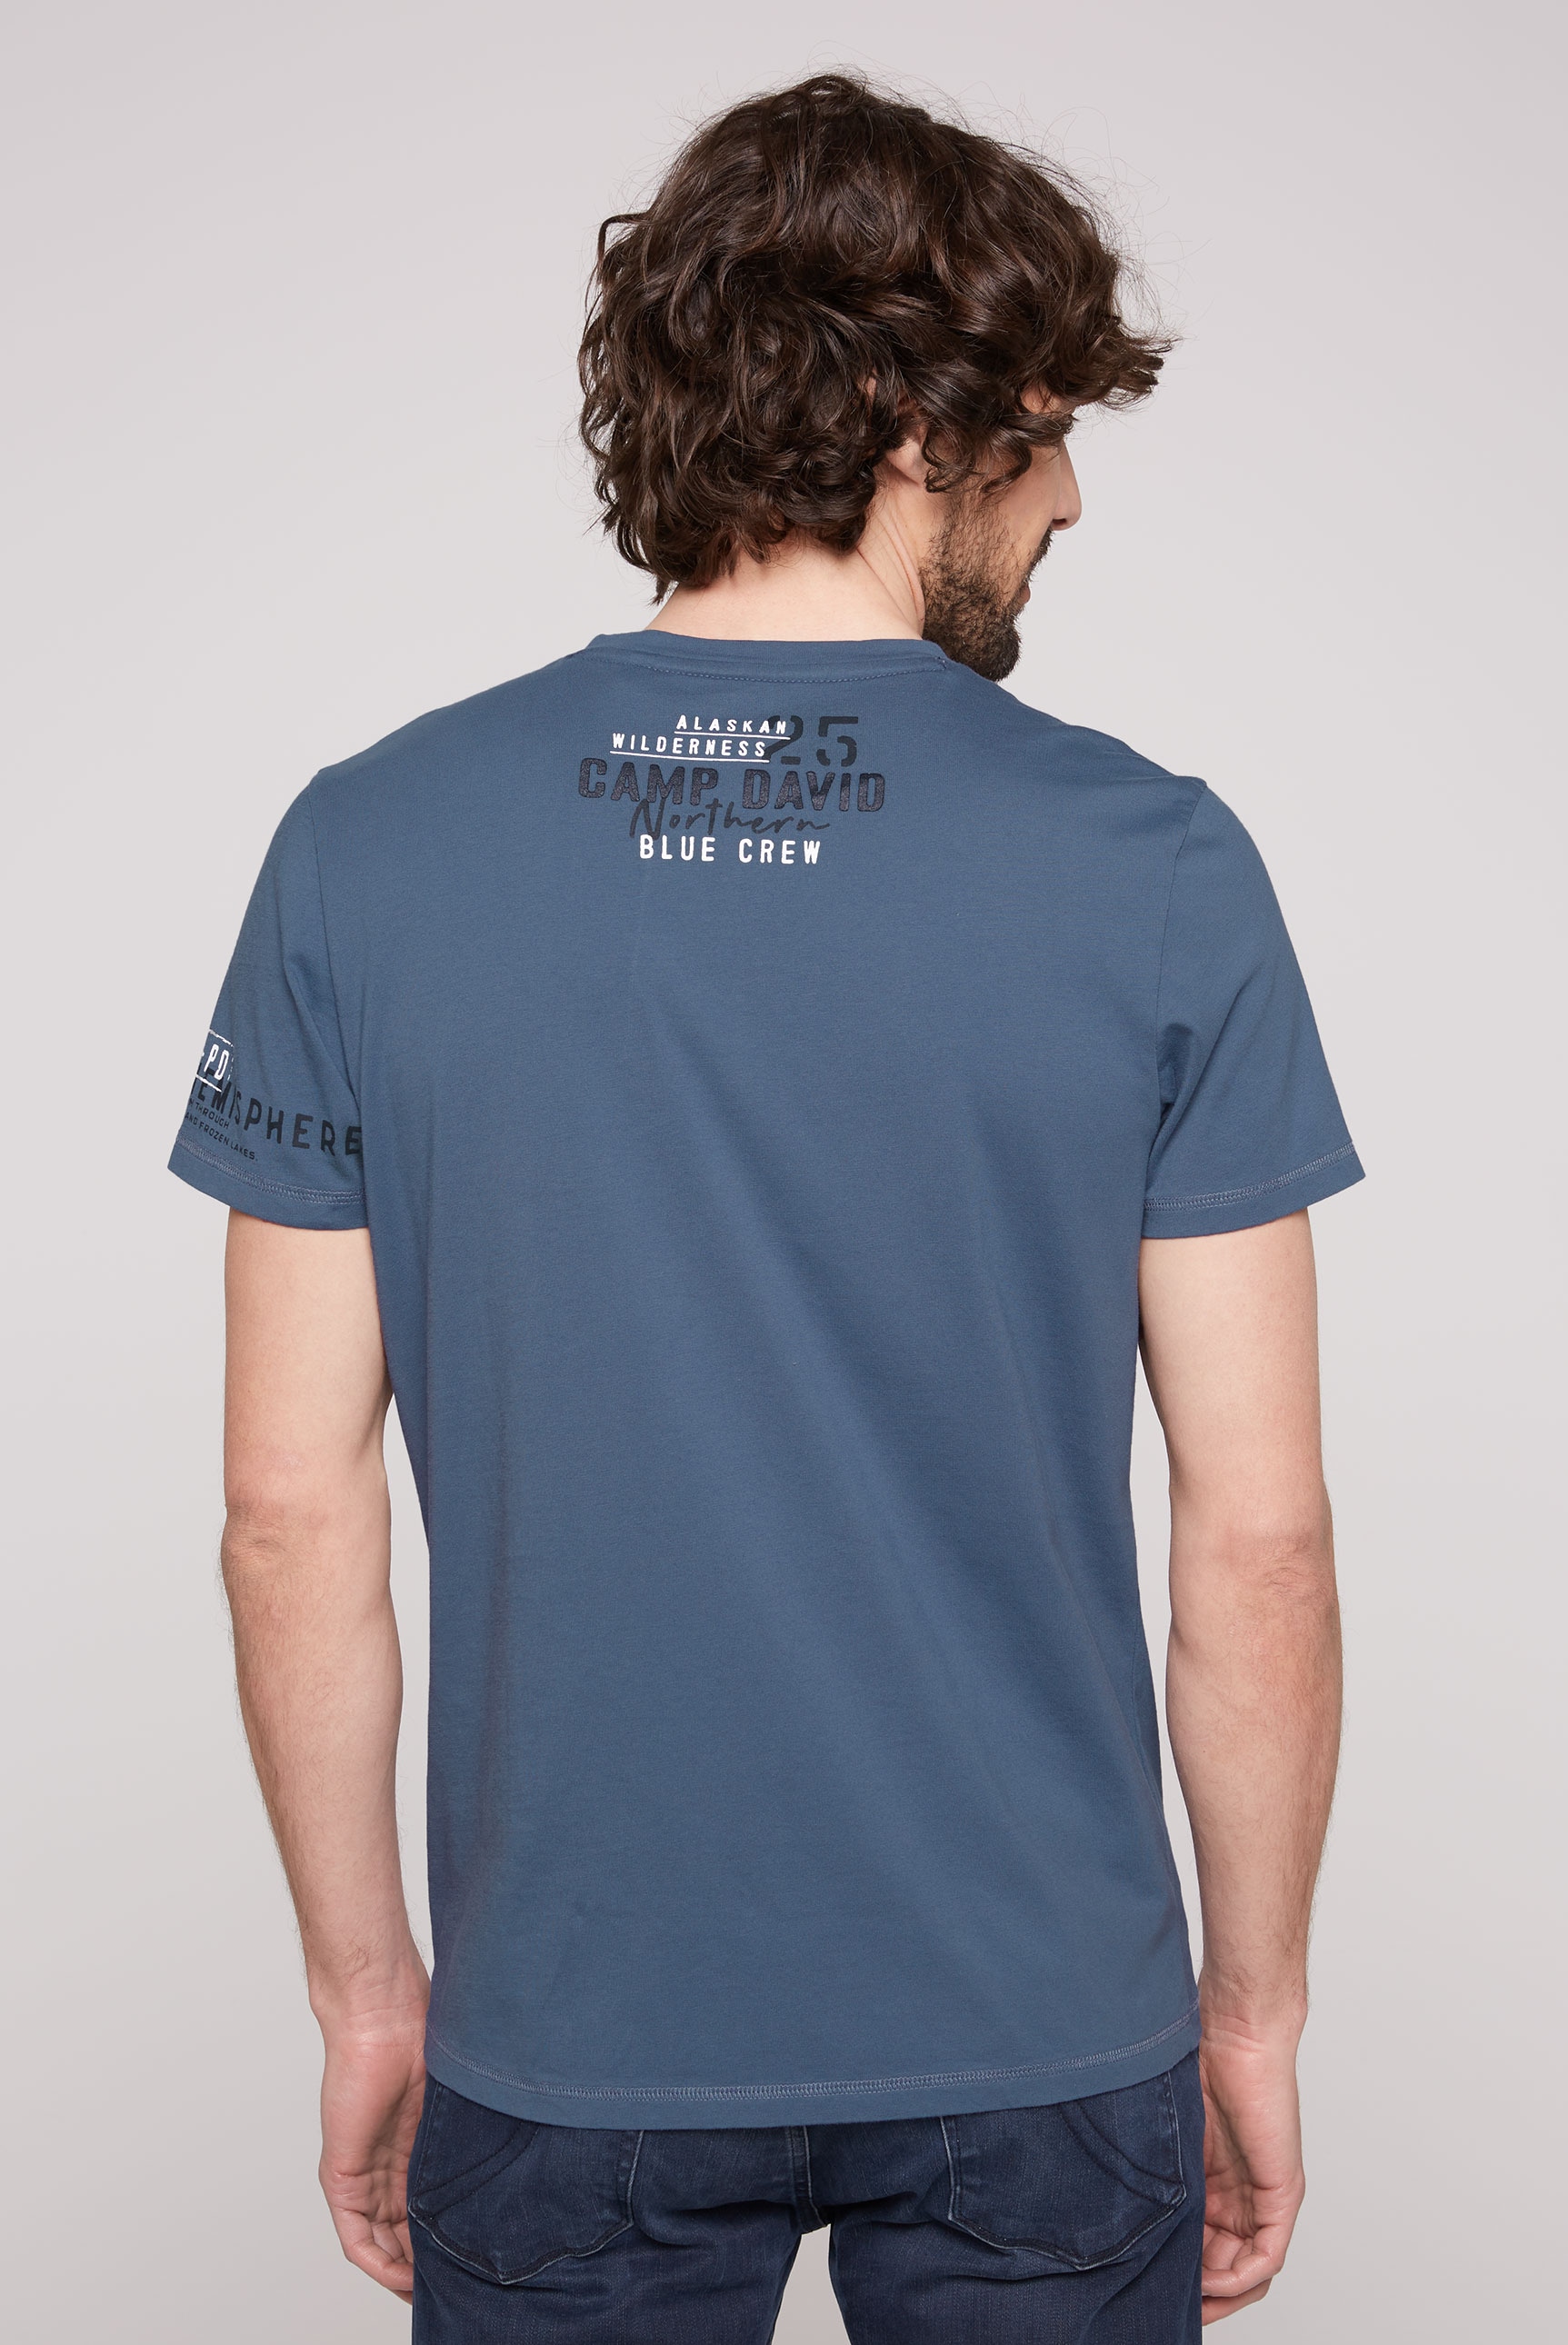 CAMP DAVID T-Shirt, mit Logo-Artworks